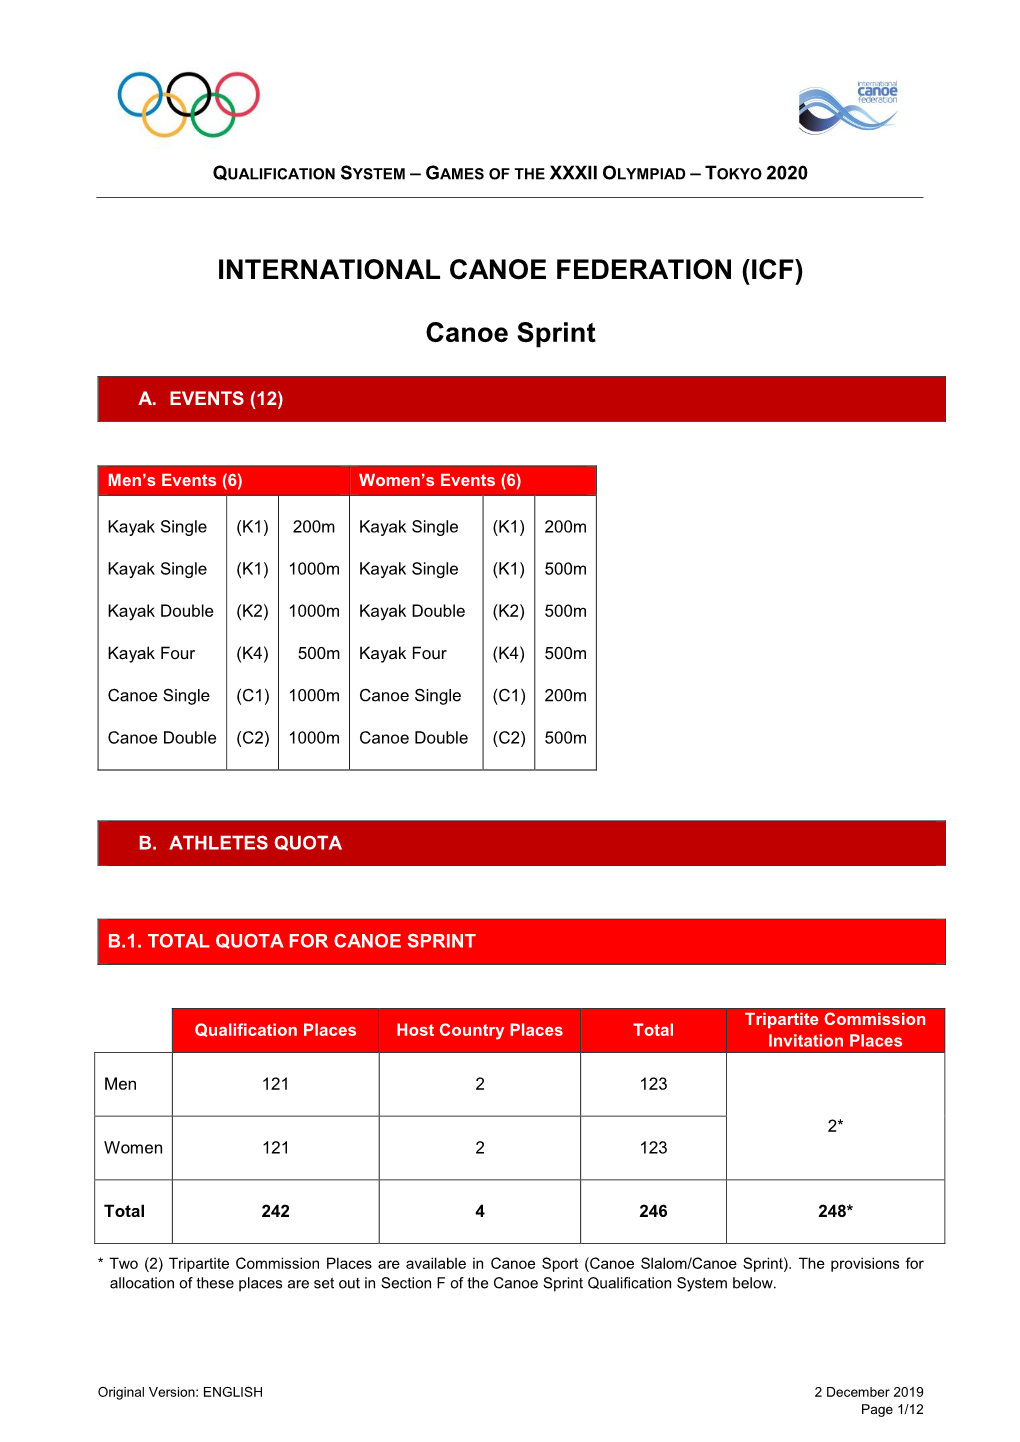 INTERNATIONAL CANOE FEDERATION (ICF) Canoe Sprint